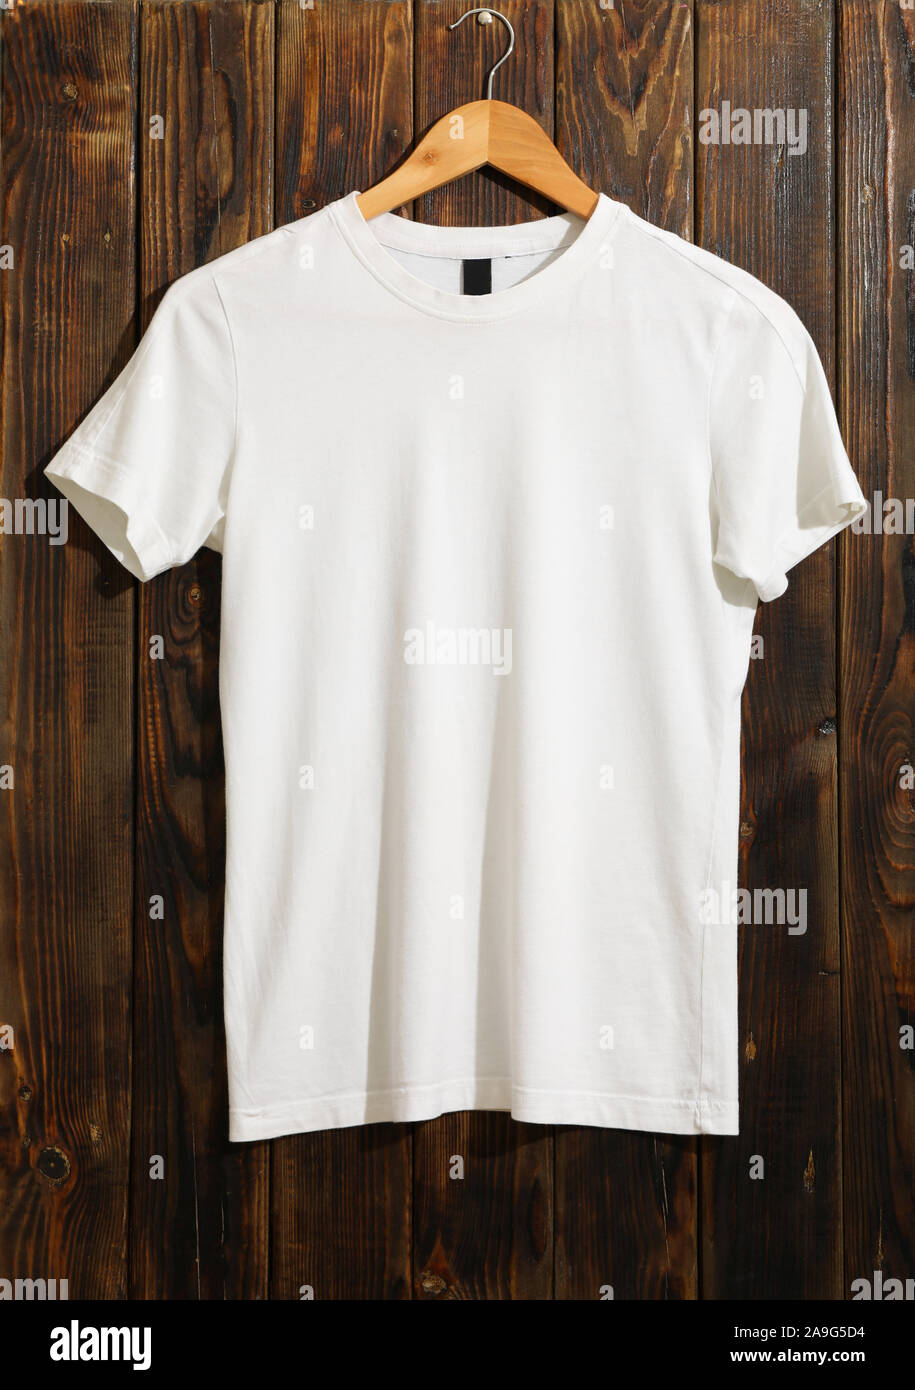 Camiseta blanca con percha fotografías e imágenes de alta resolución - Alamy